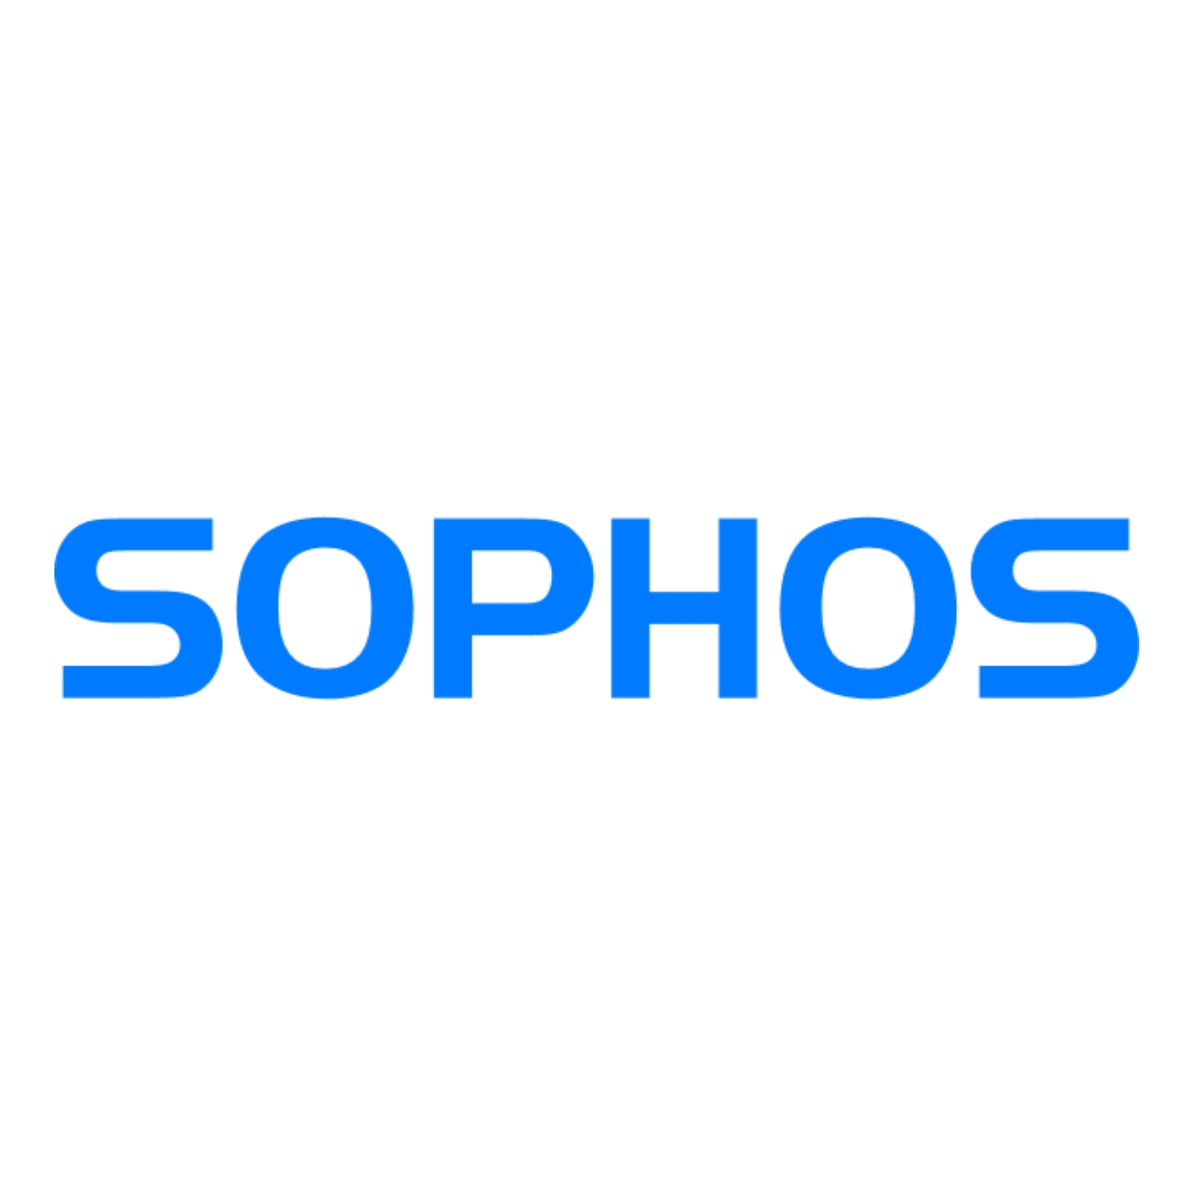 Sophos - Fully Synchronized, Cloud-Native Data Security